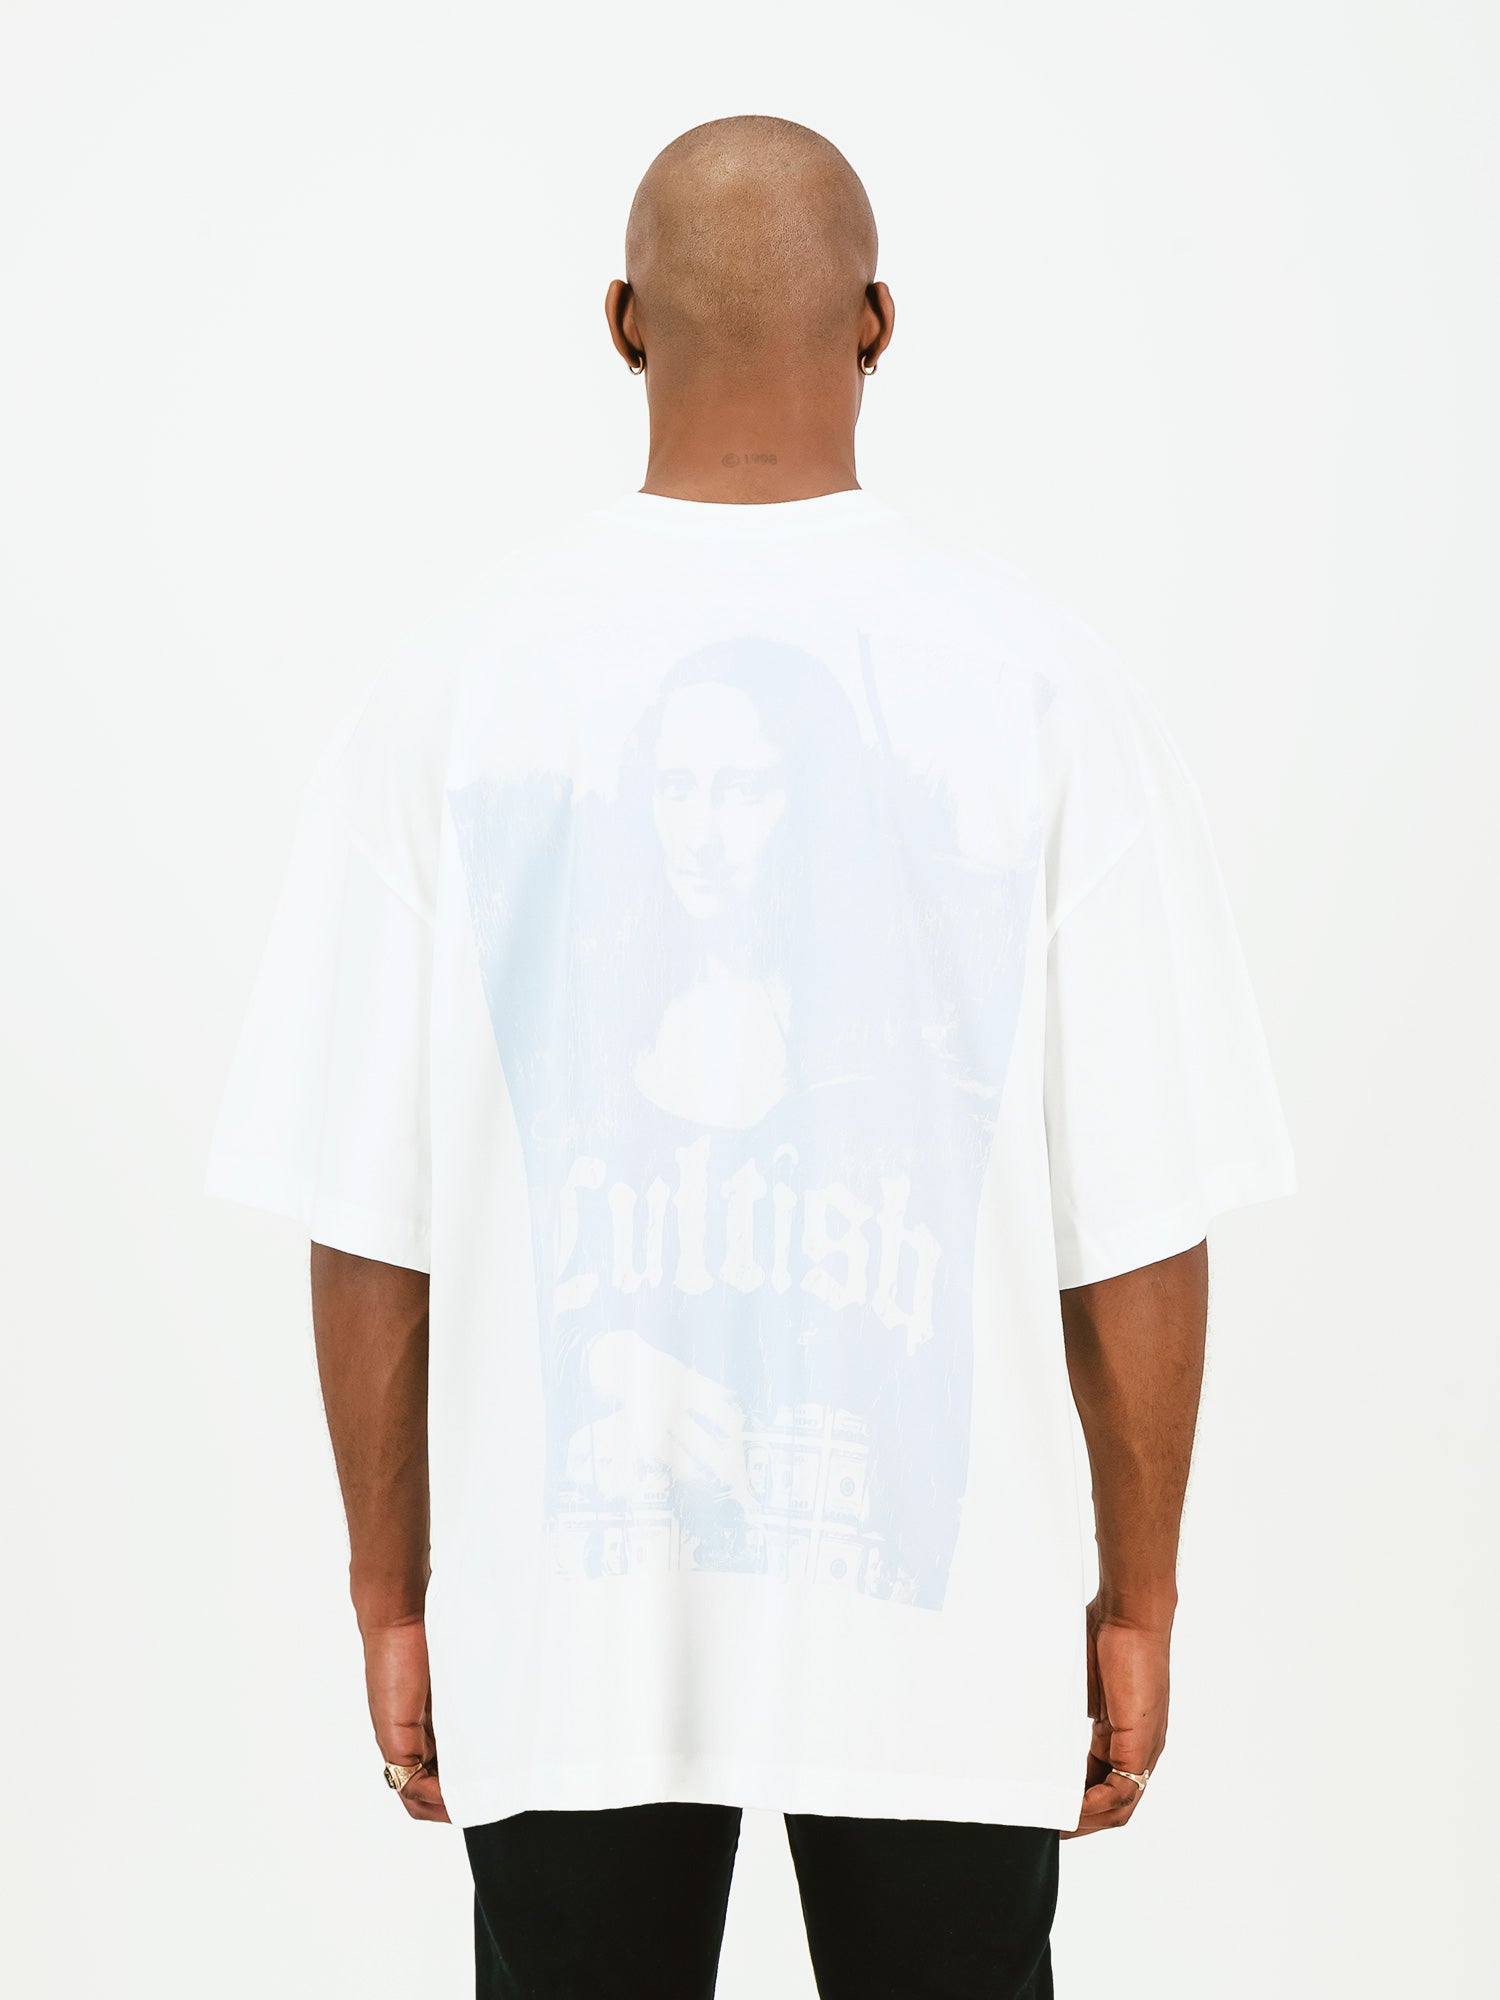 BL/W Mona Li$a Oversized T-Shirt